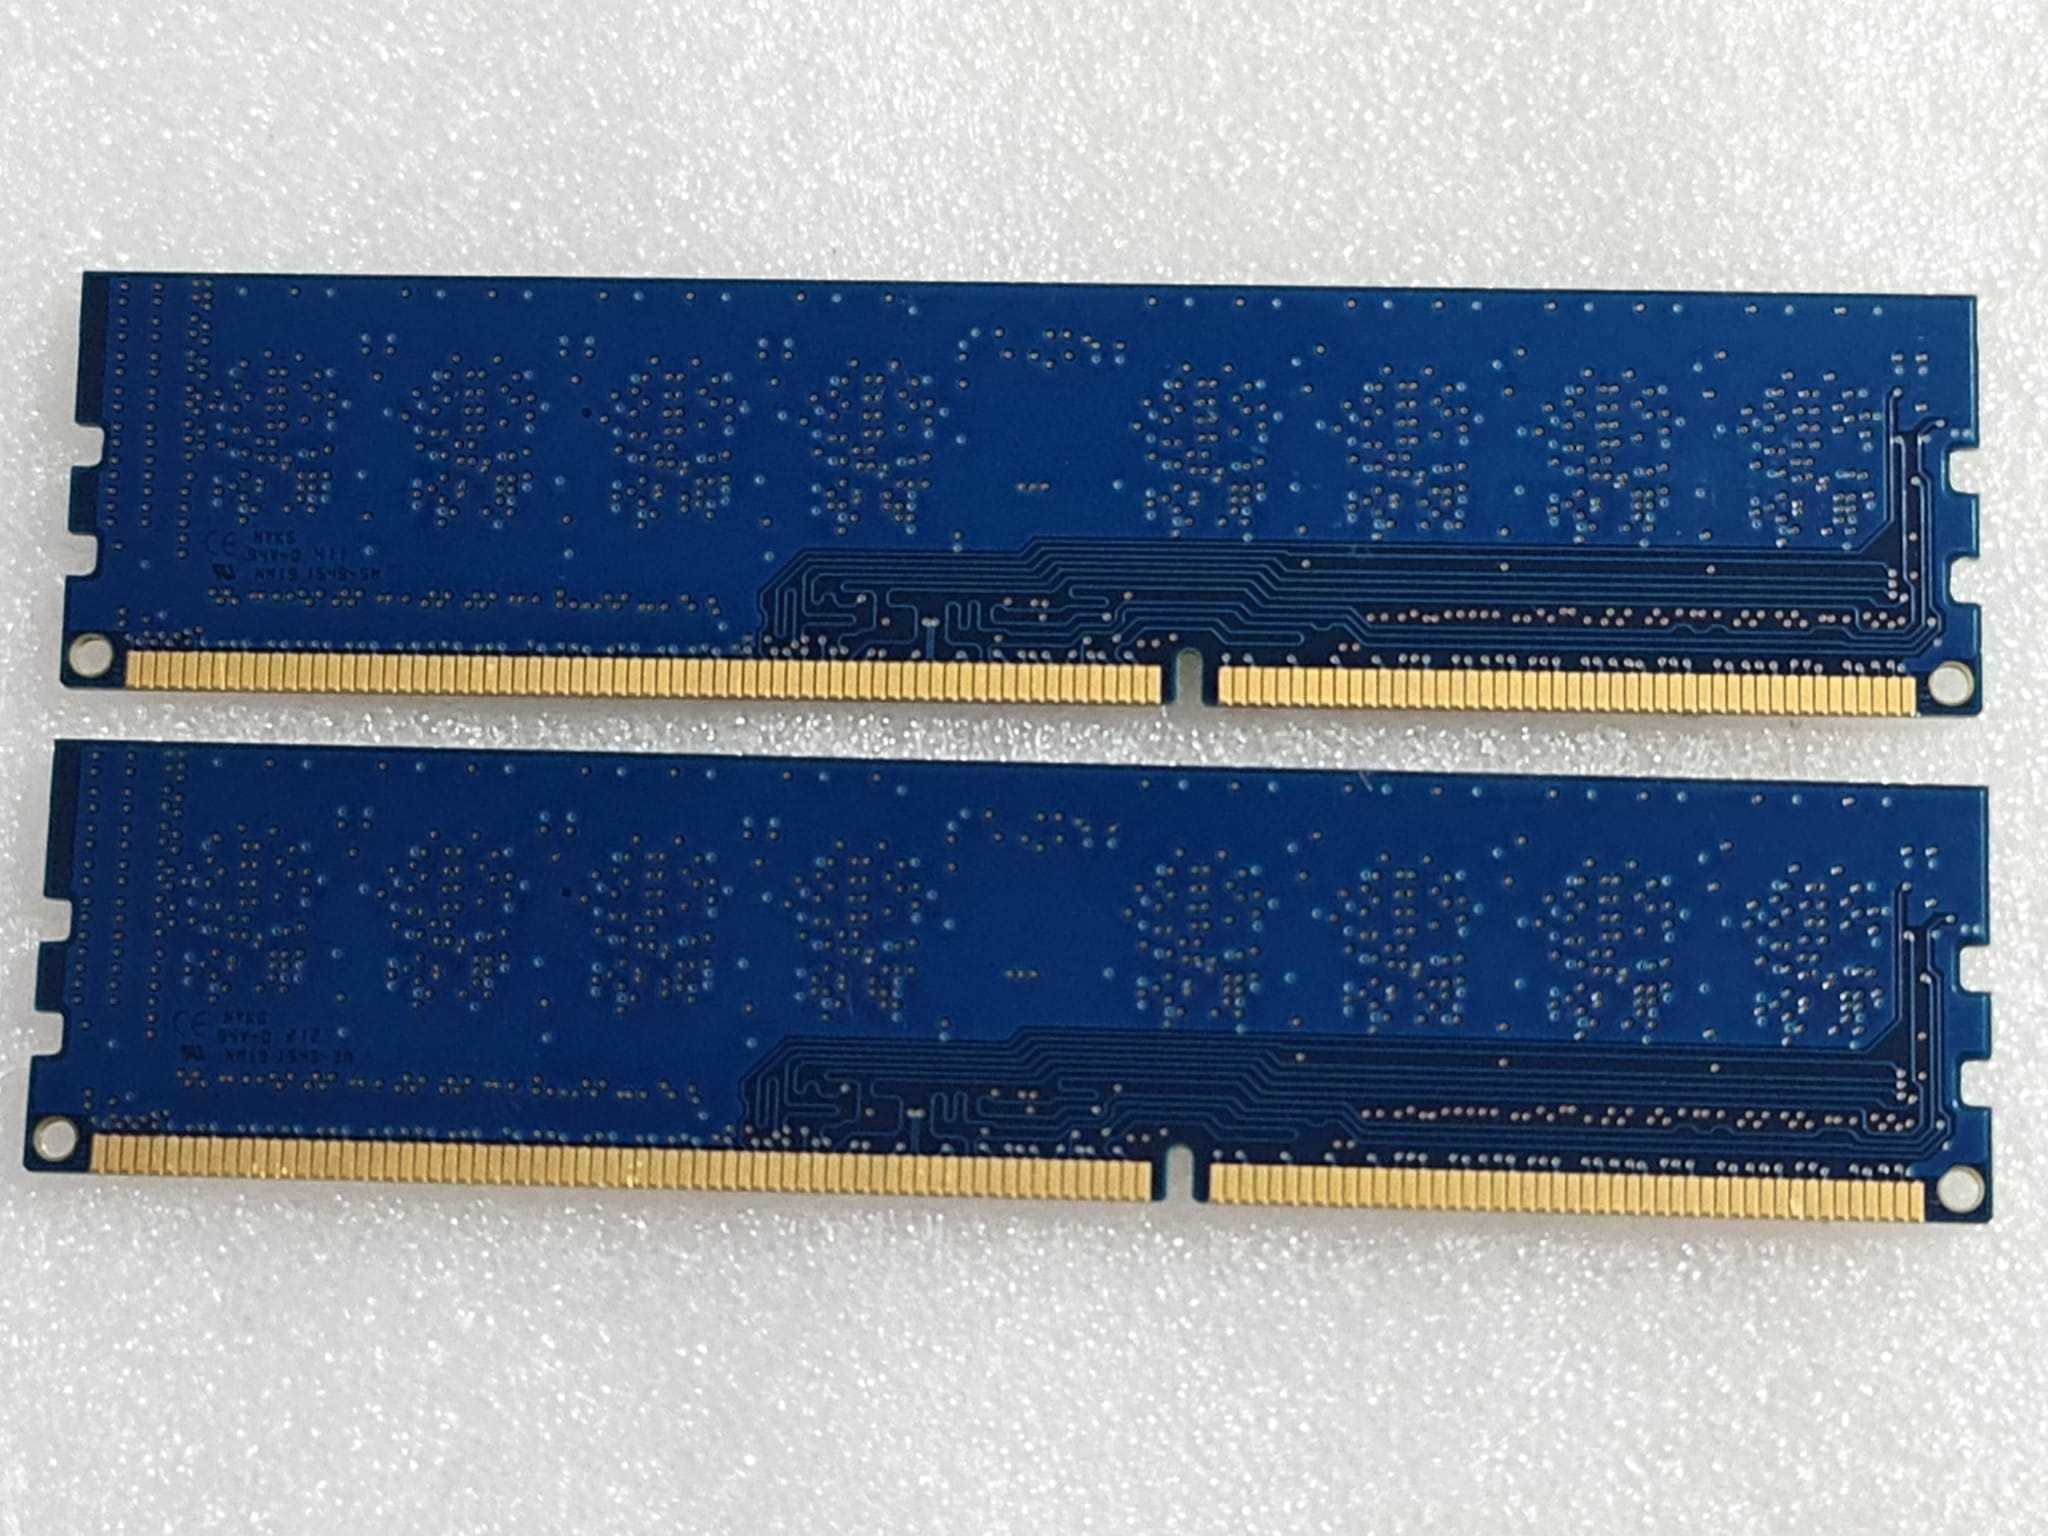 Memorie RAM desktop Kingston KVR16N11S8H/4, 4GB, 1600MHz, CL11, DDR3